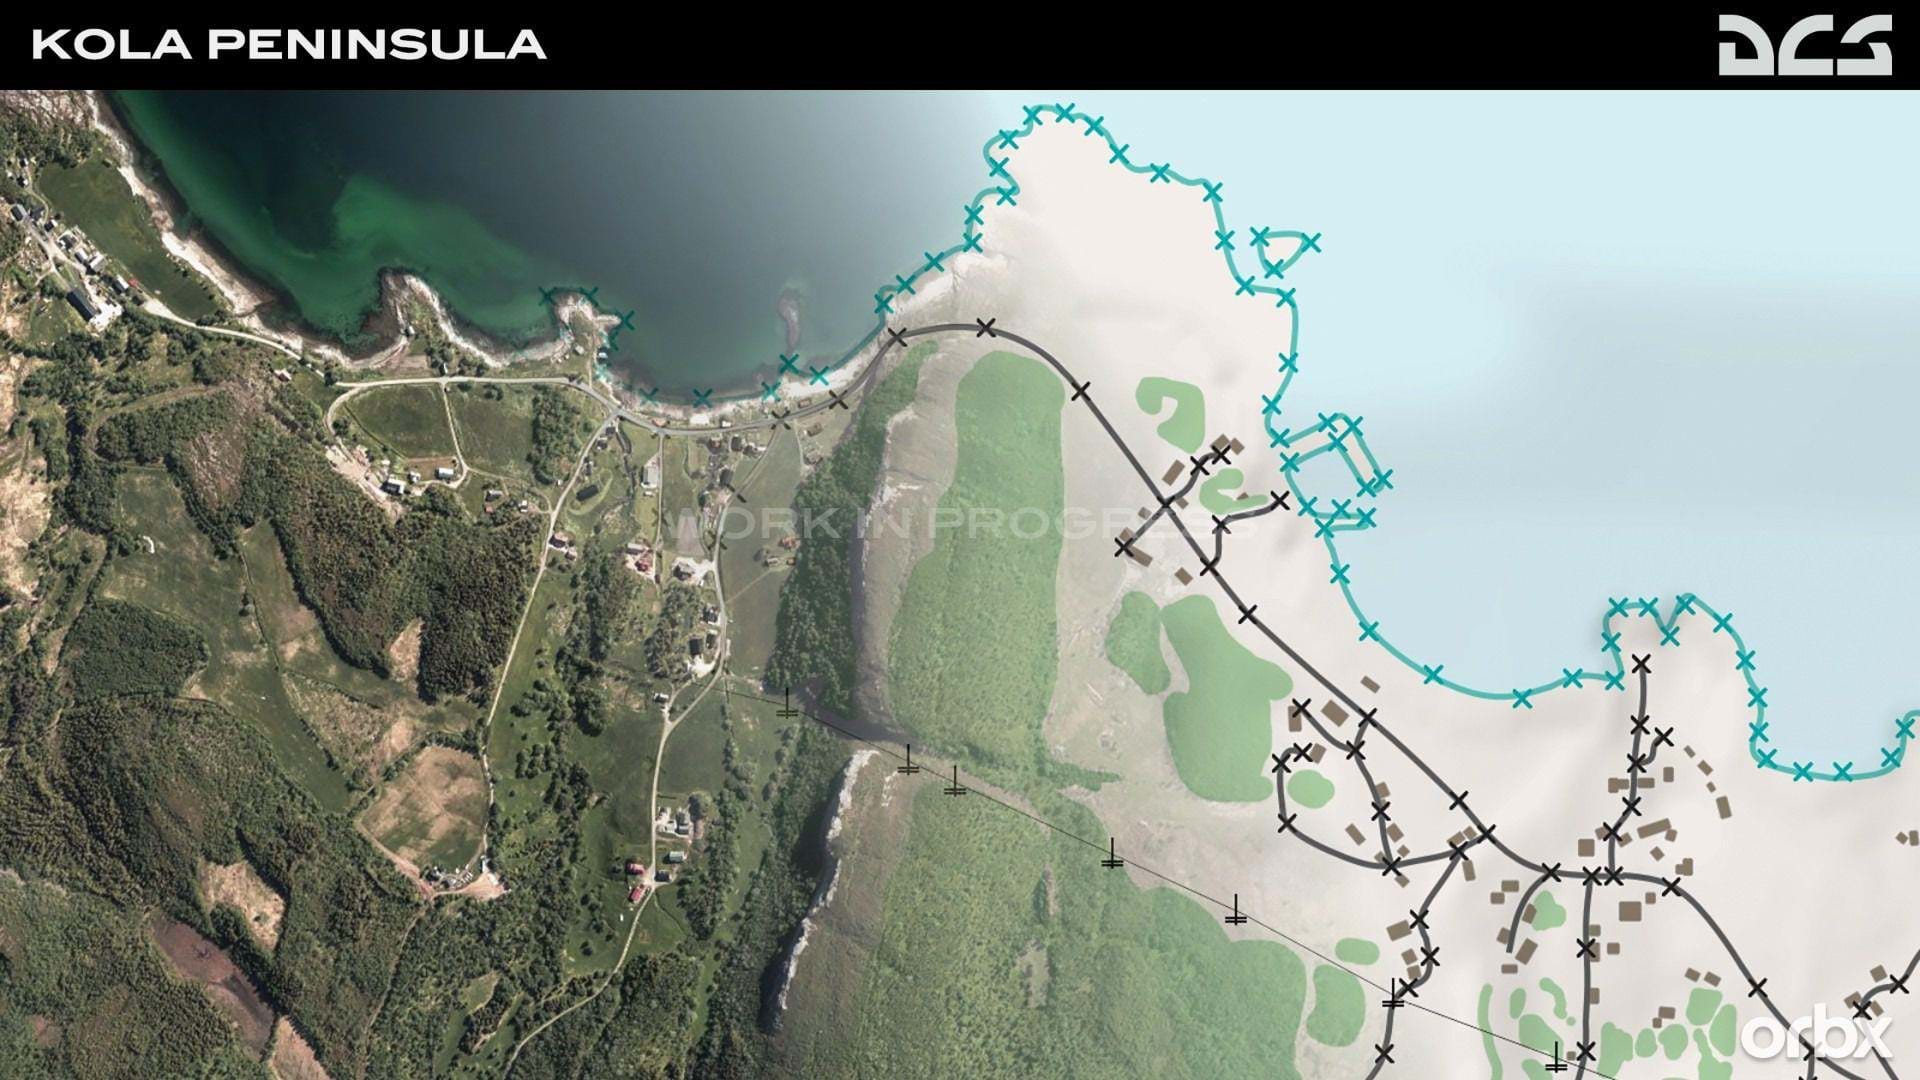 Kola Peninsula for DCS by Orbx